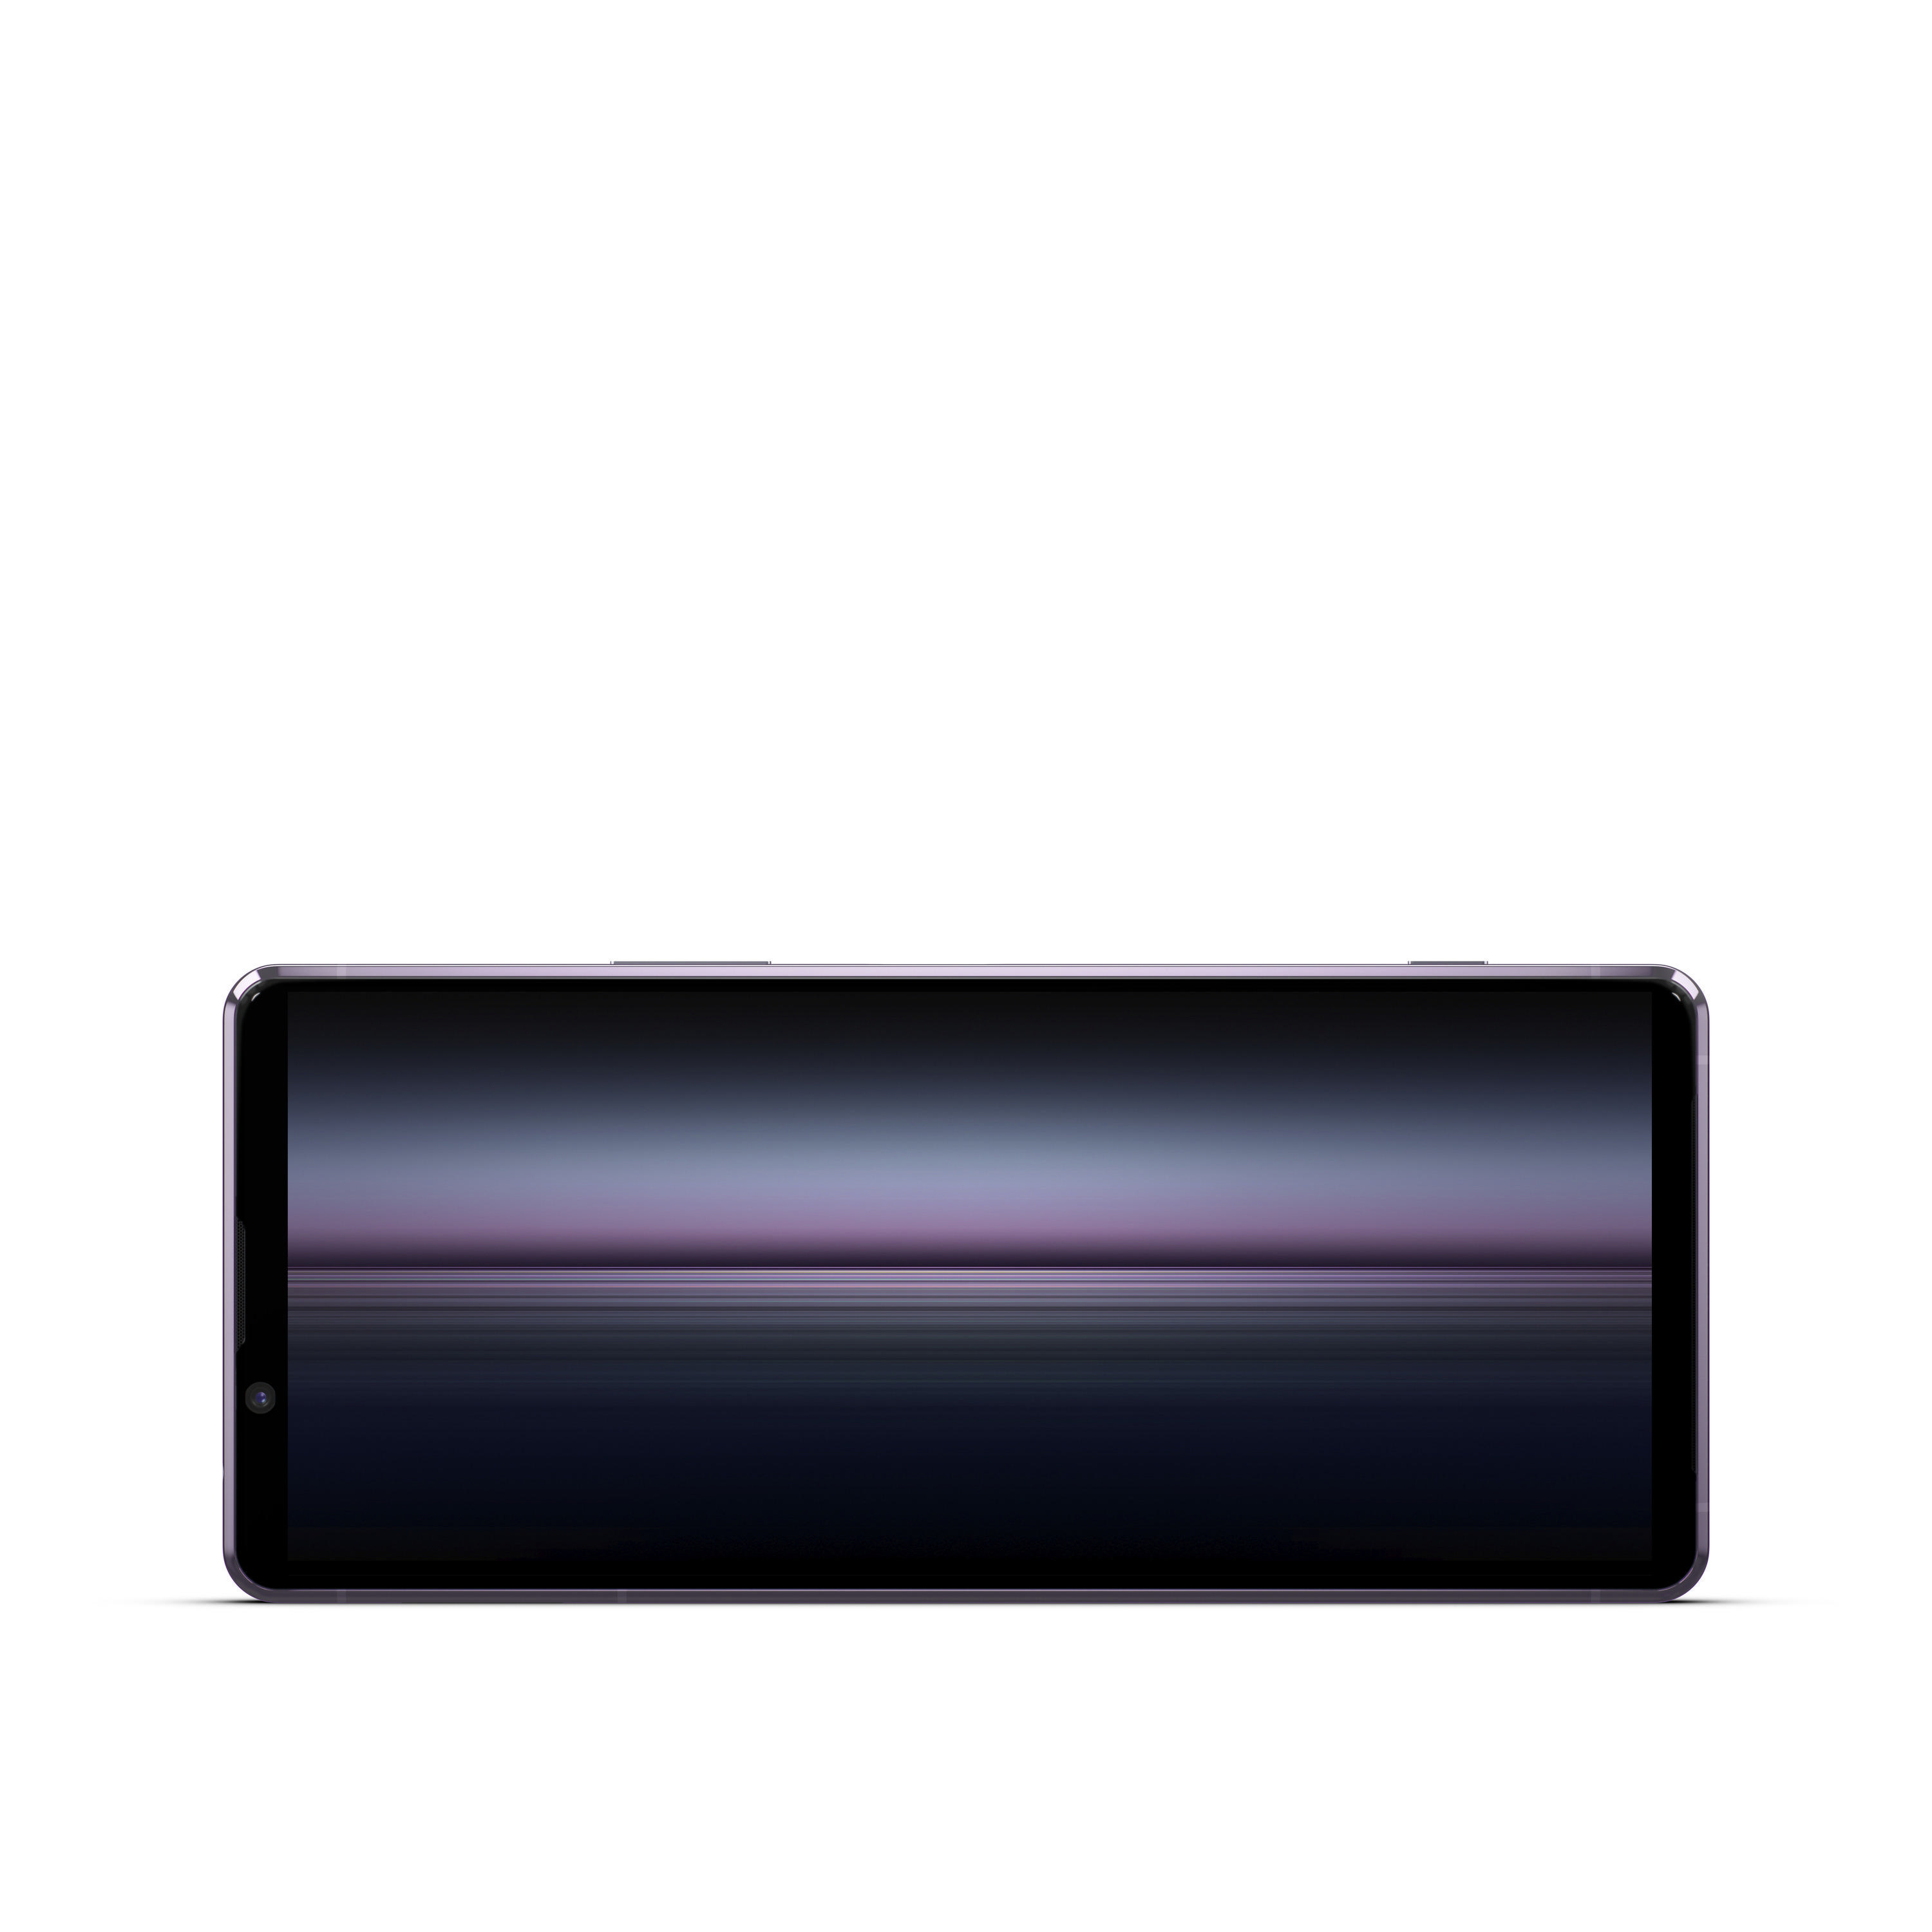 5G Purple 21:9 256 II GB SONY Xperia 1 Display